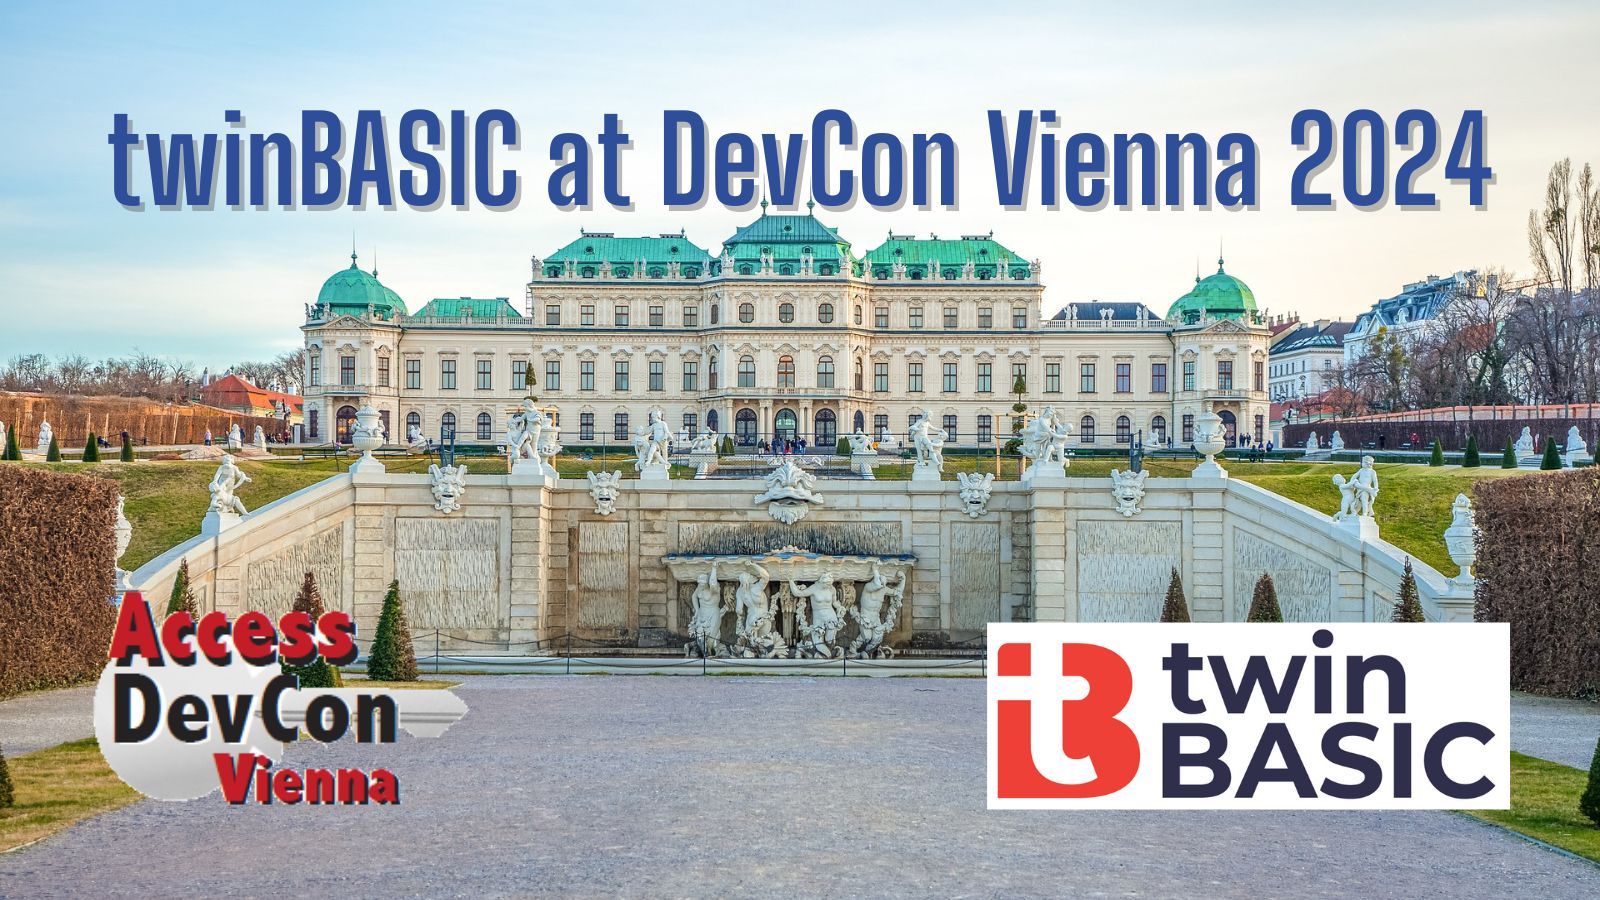 twinBASIC at Access DevCon Vienna 2024